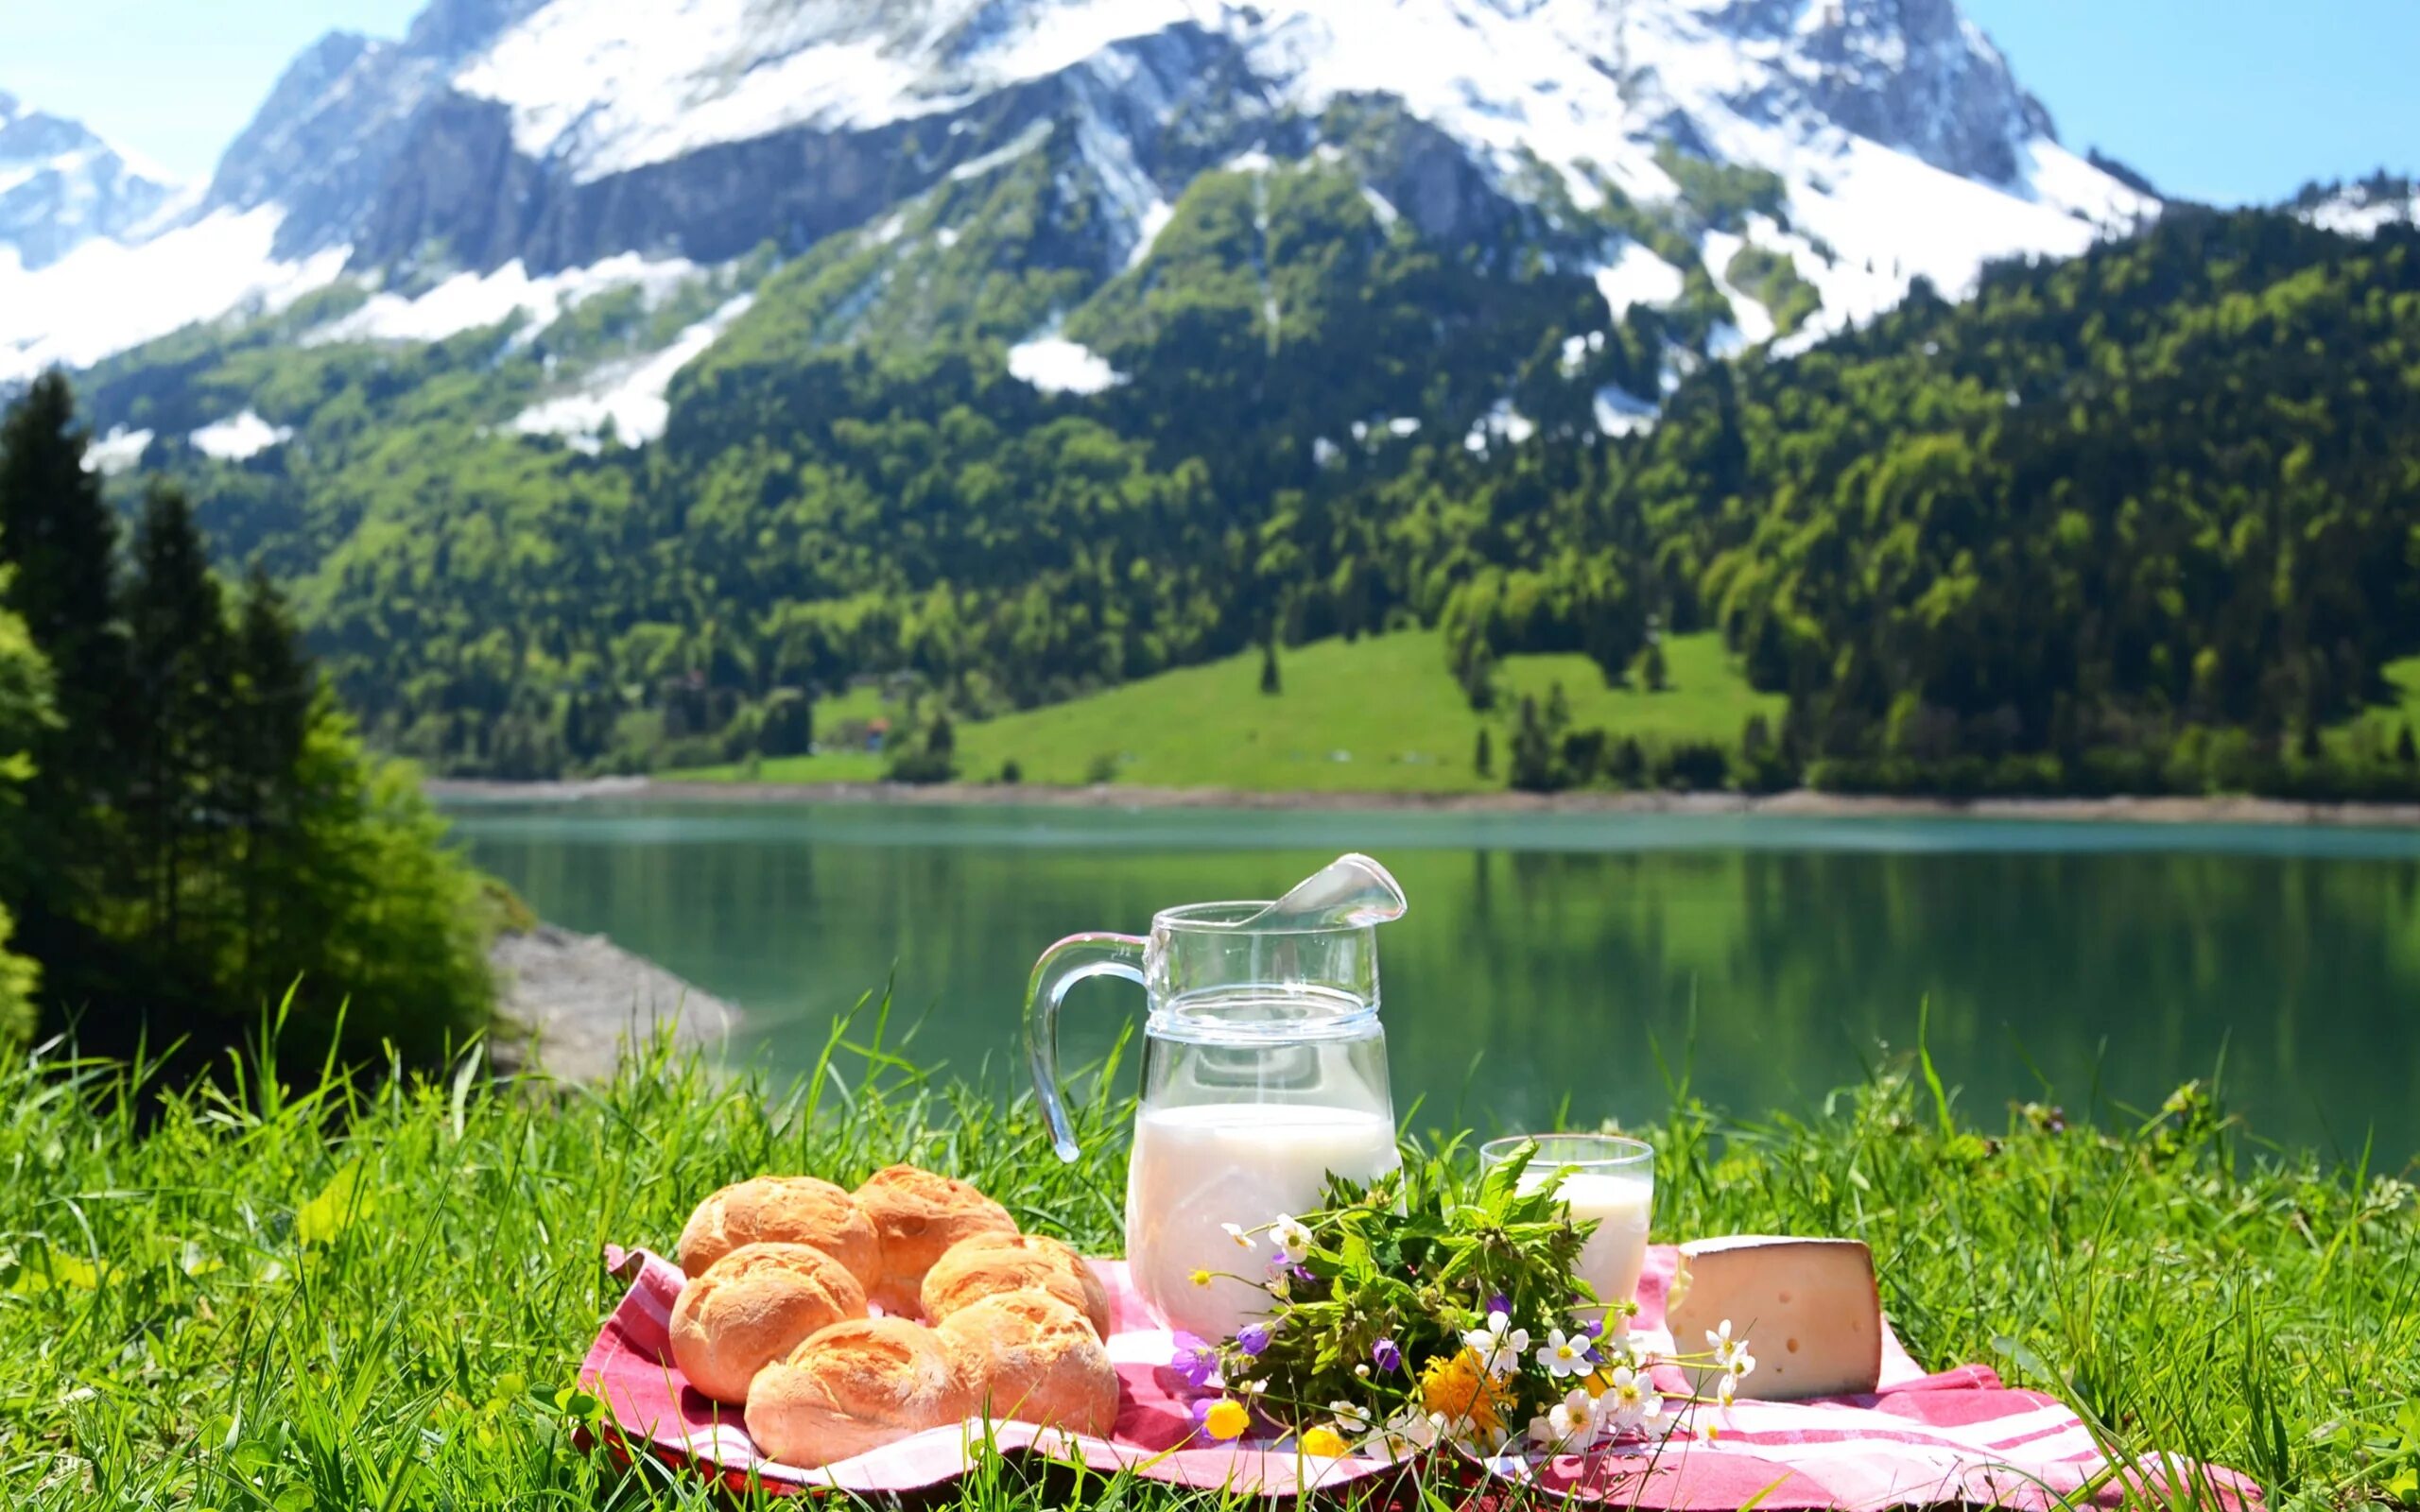 Завтрак на природе. Завтрак в горах на природе. Пикник на природе. Красивый завтрак на природе. Отдых выходного дня россия